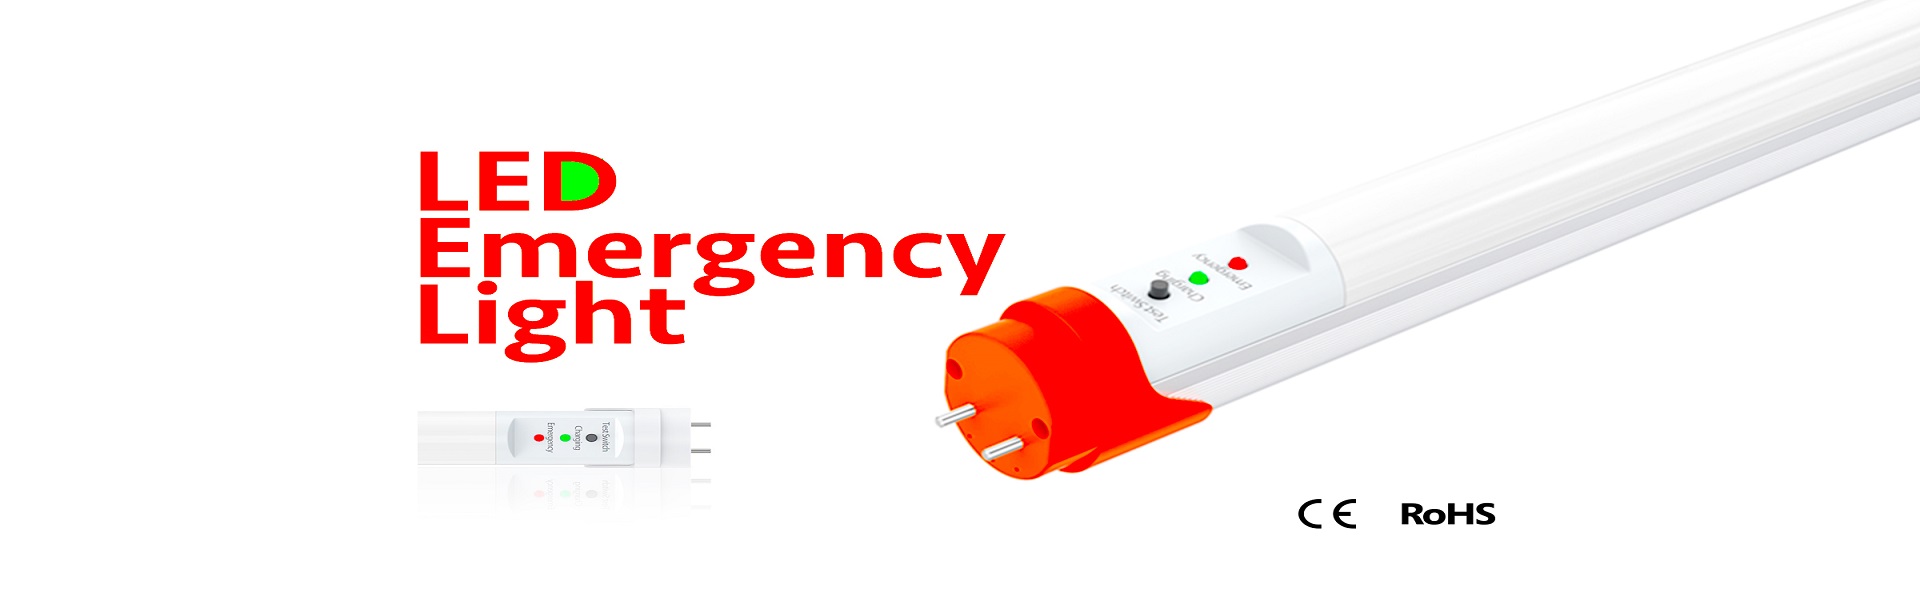 13-LED-Emergency-Ljocht